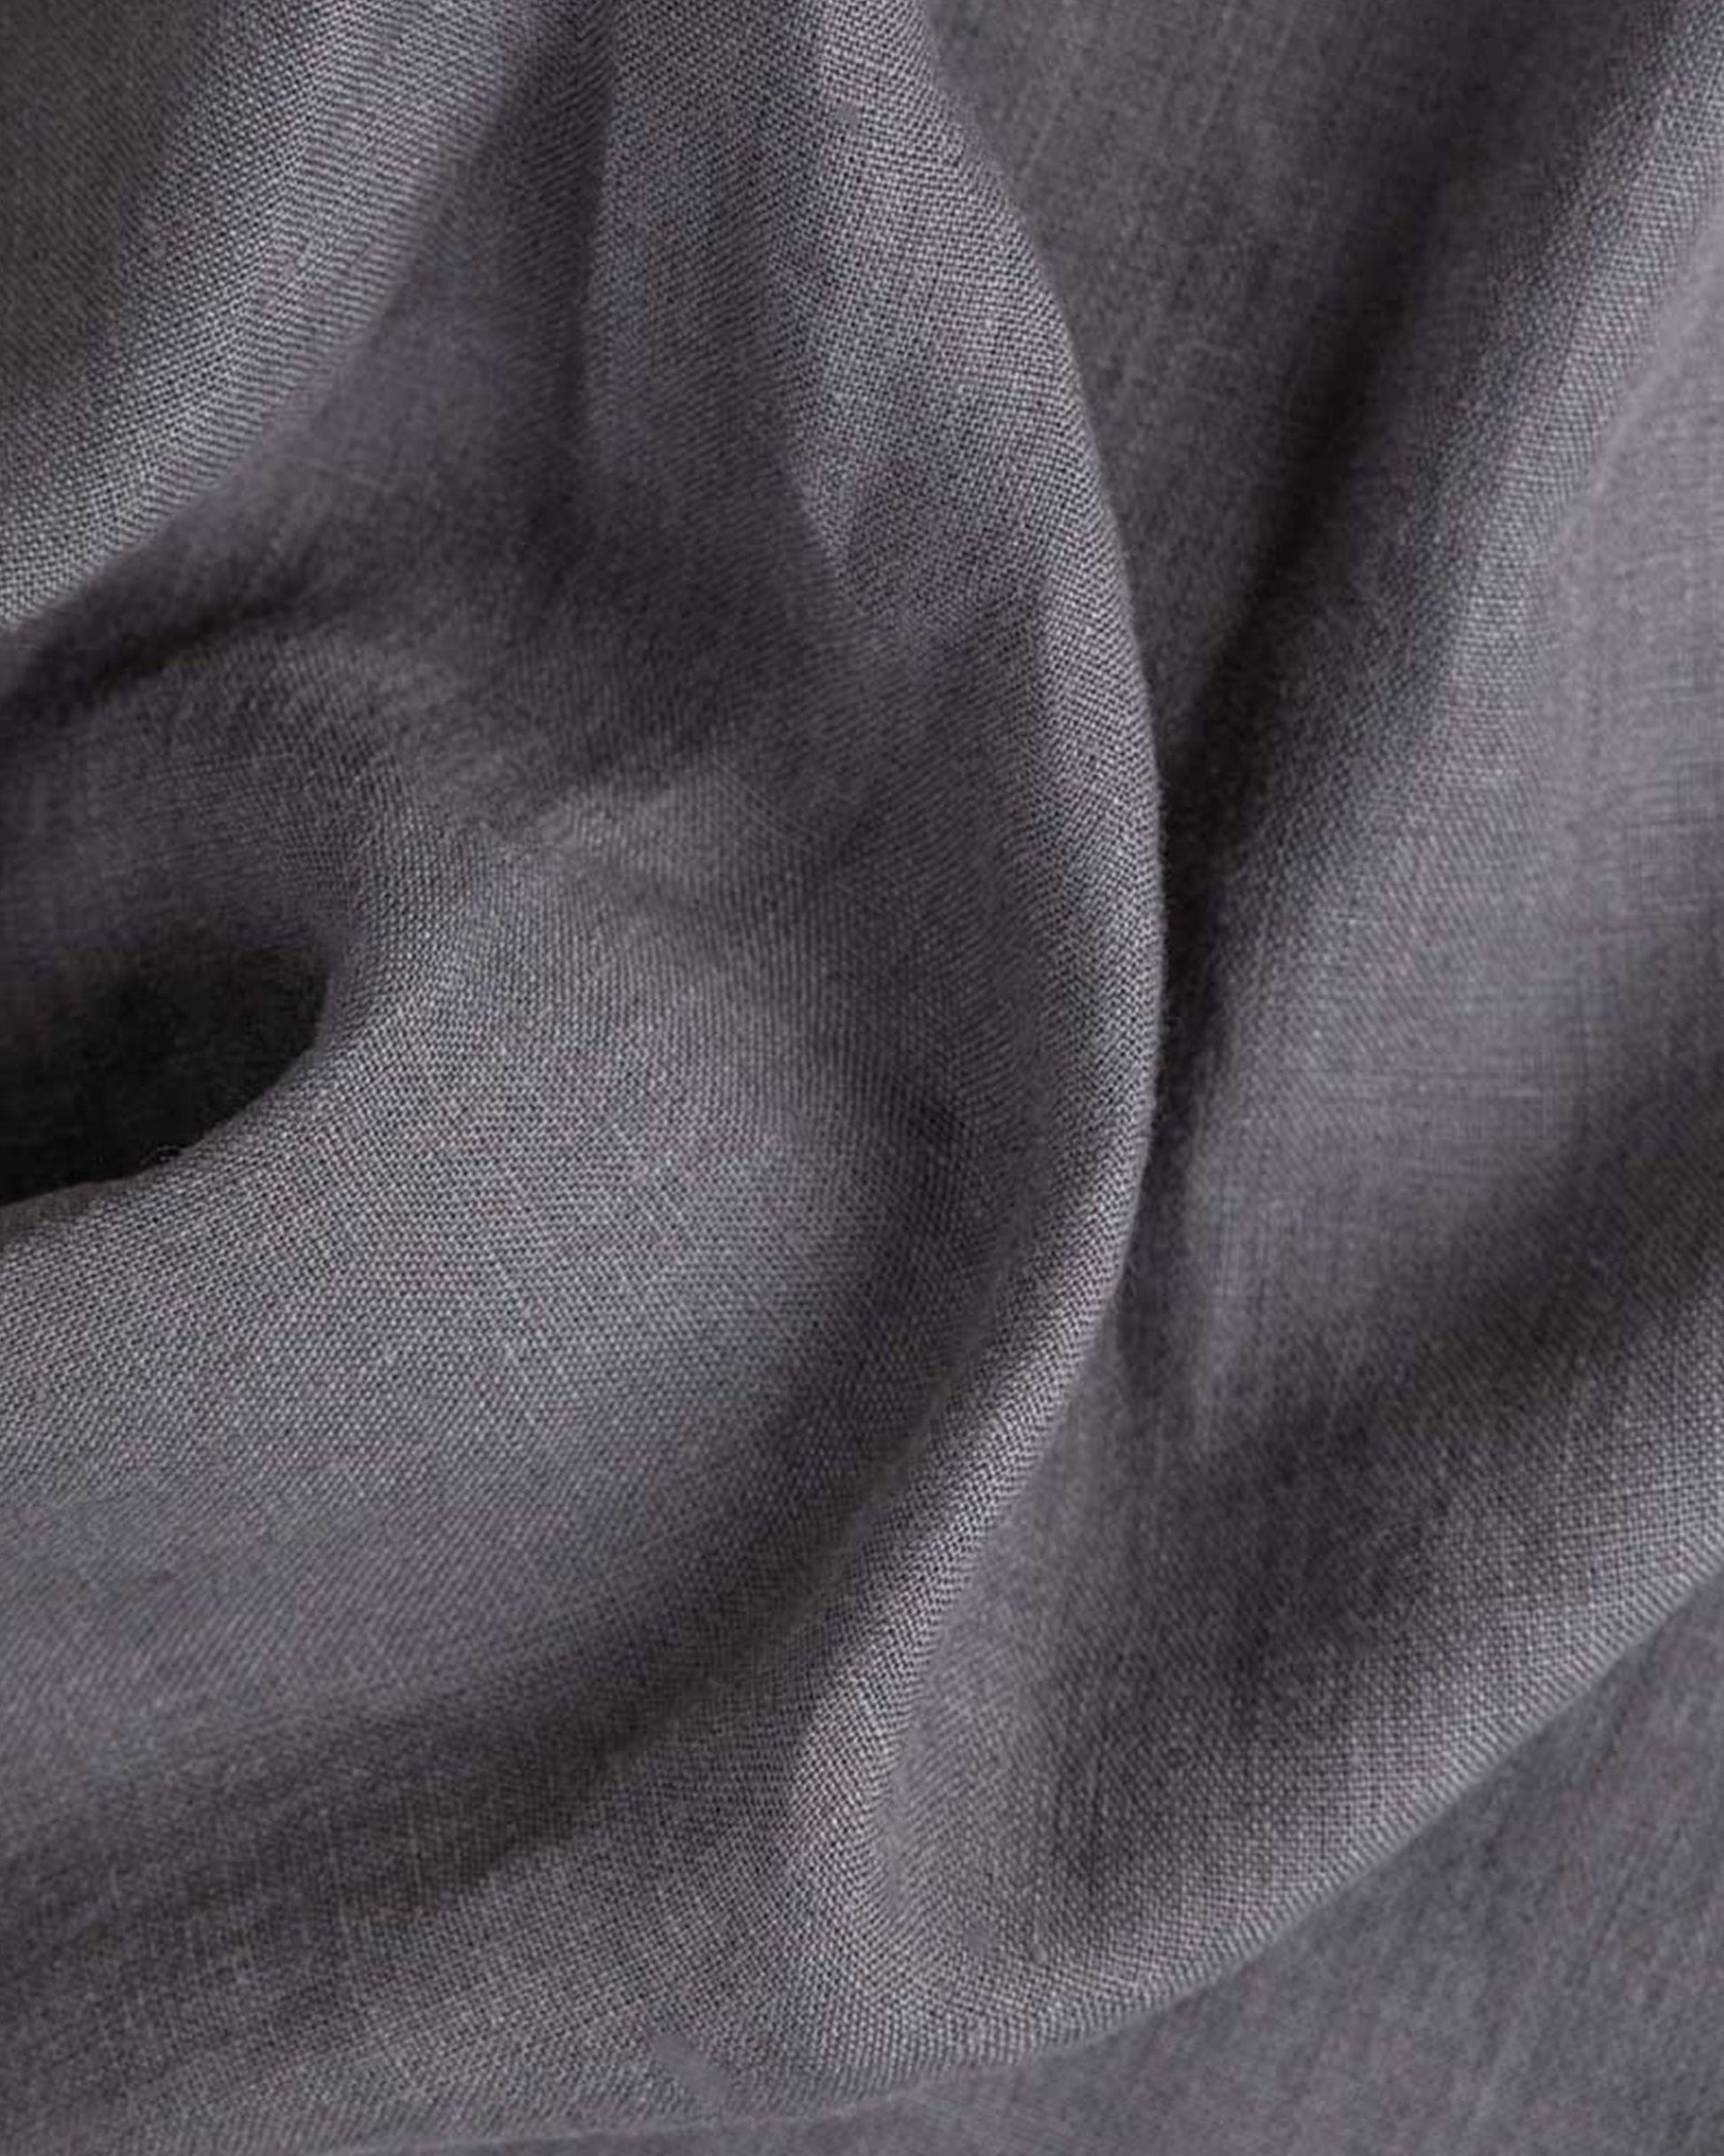 Charcoal gray linen placemat set of 2 - MagicLinen